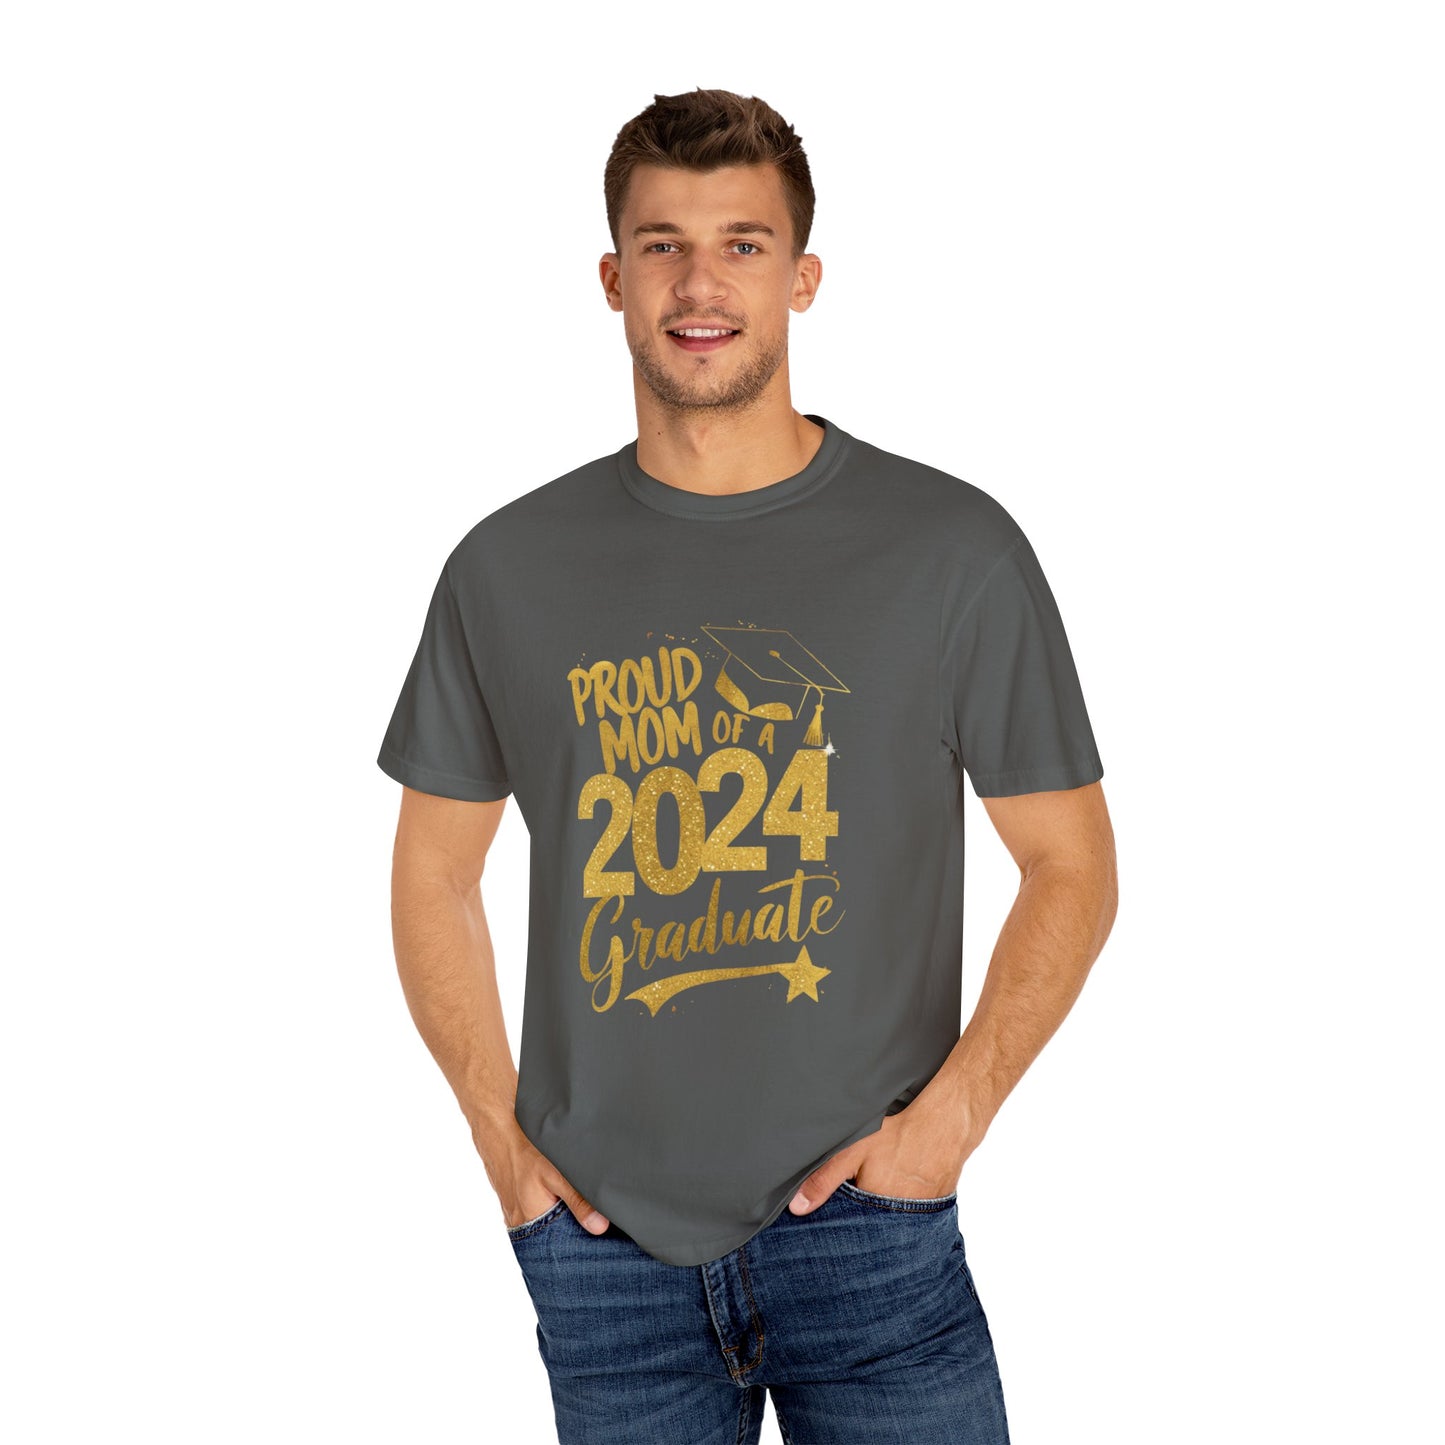 Proud of Mom 2024 Graduate Unisex Garment-dyed T-shirt Cotton Funny Humorous Graphic Soft Premium Unisex Men Women Pepper T-shirt Birthday Gift-51